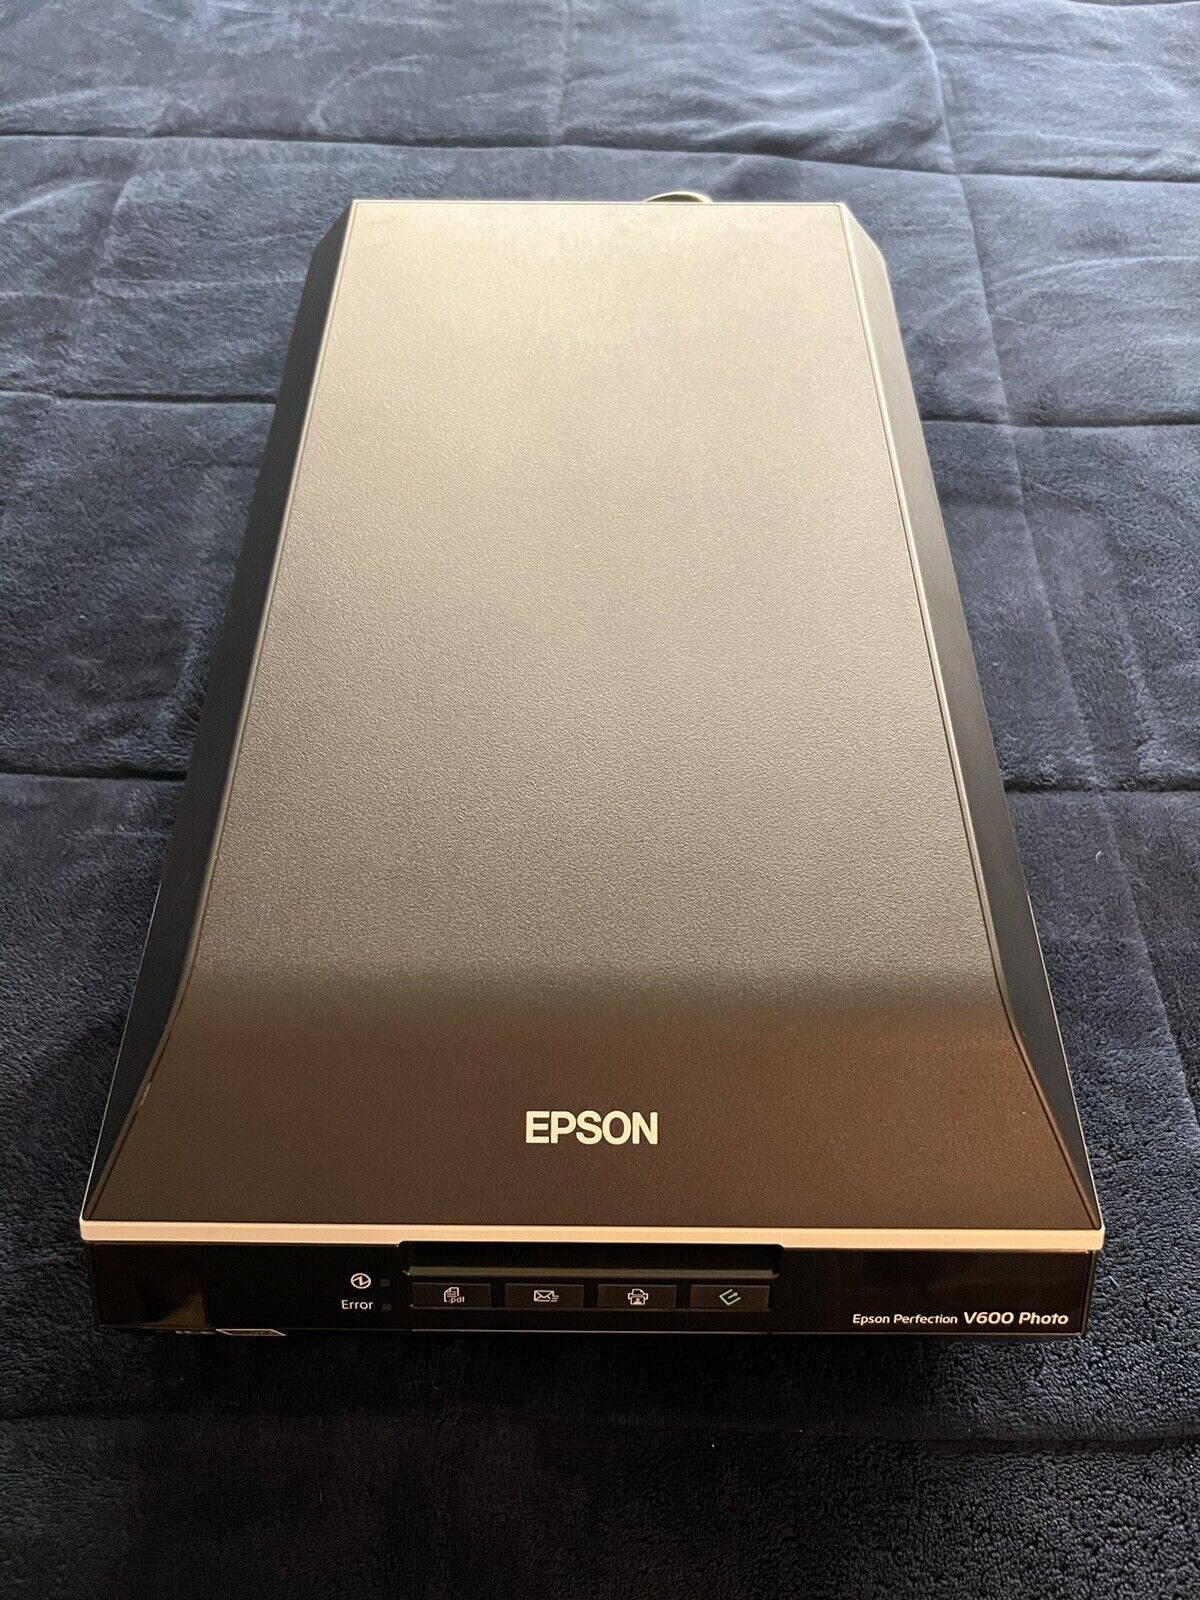 Epson Perfection v600 Photo Scanner